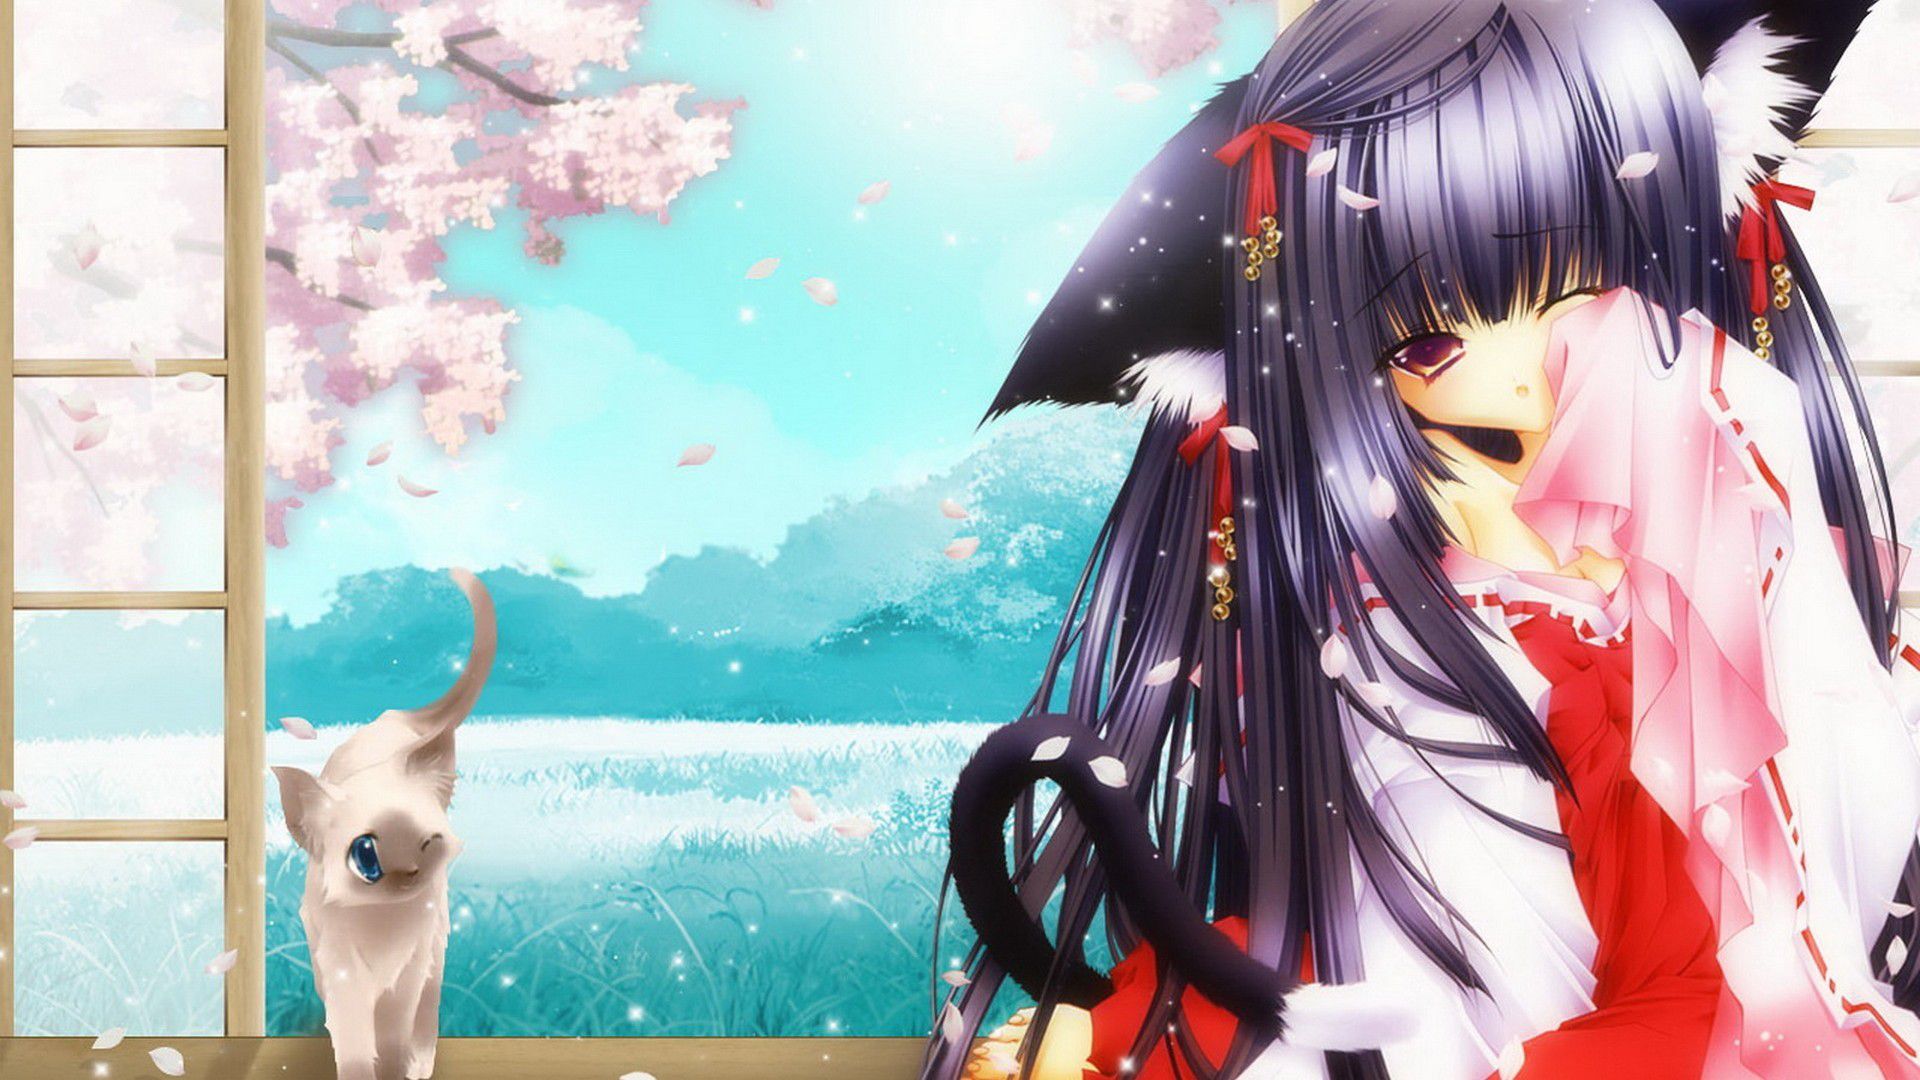 Anime Kawaii PC Wallpapers - Top Free Anime Kawaii PC Backgrounds